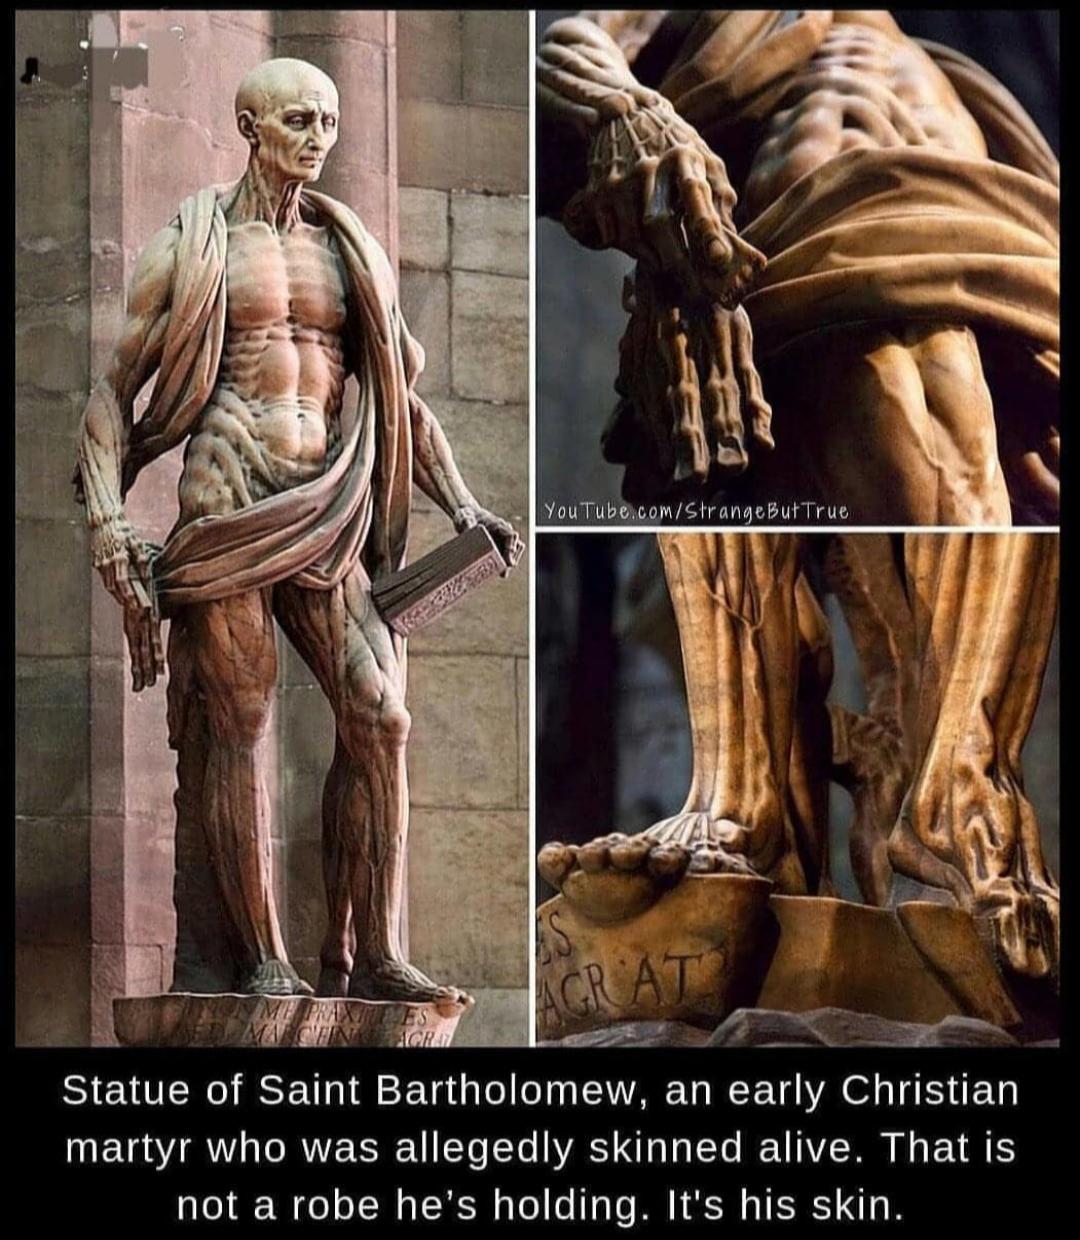 Saint Bartholomew went through some stuff.